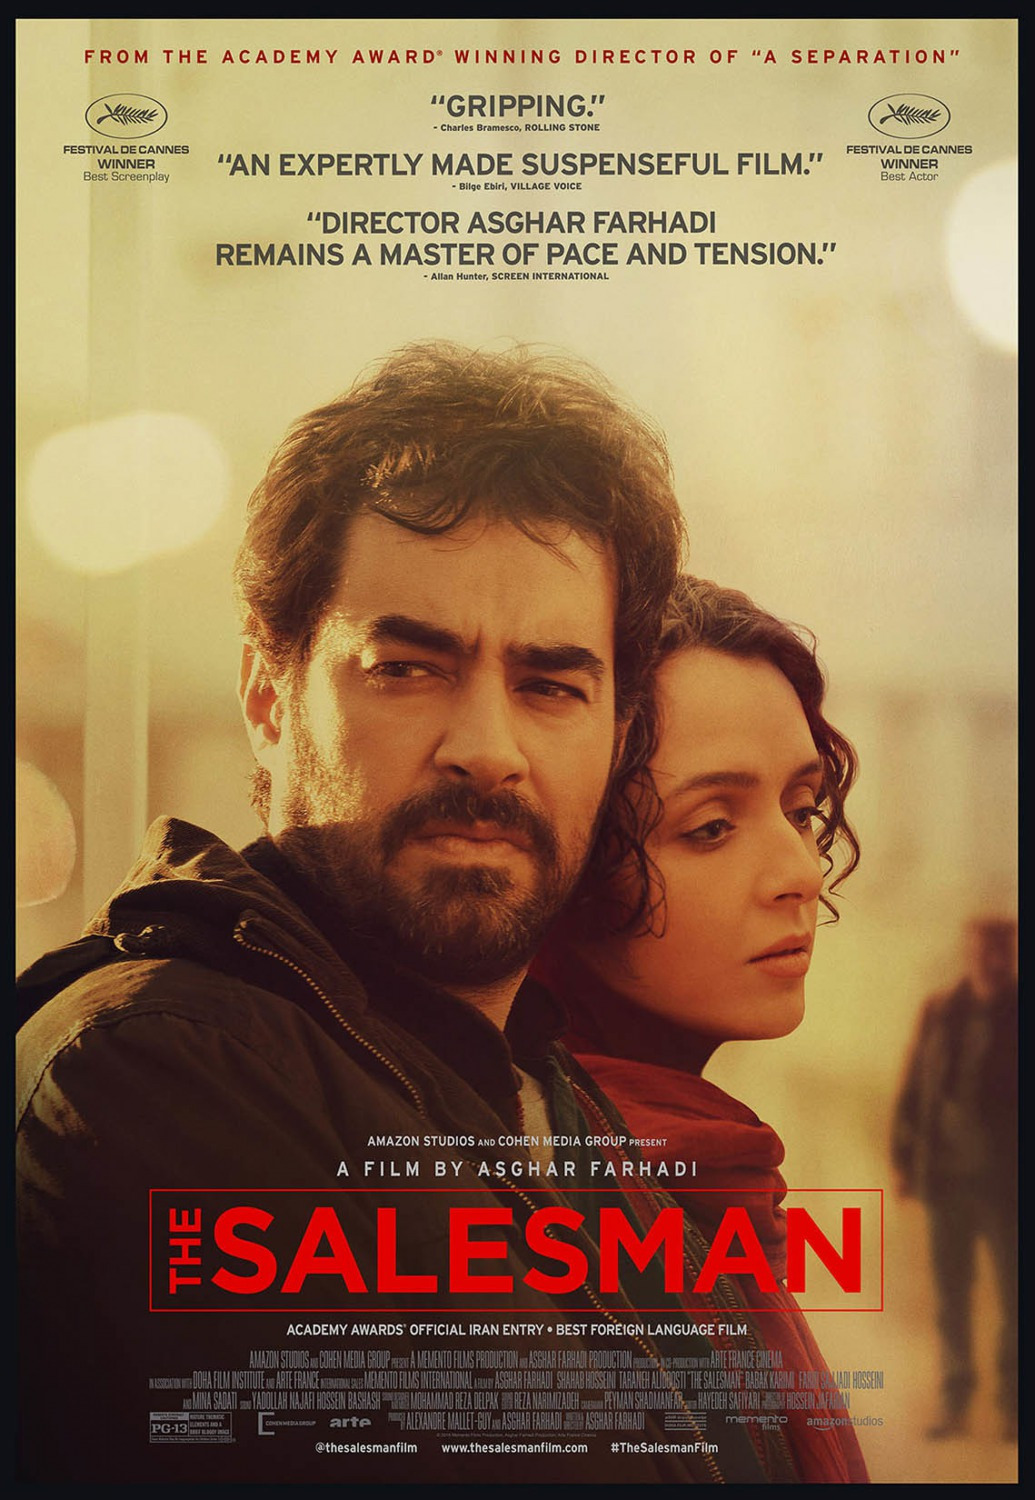 The Salesman film poster